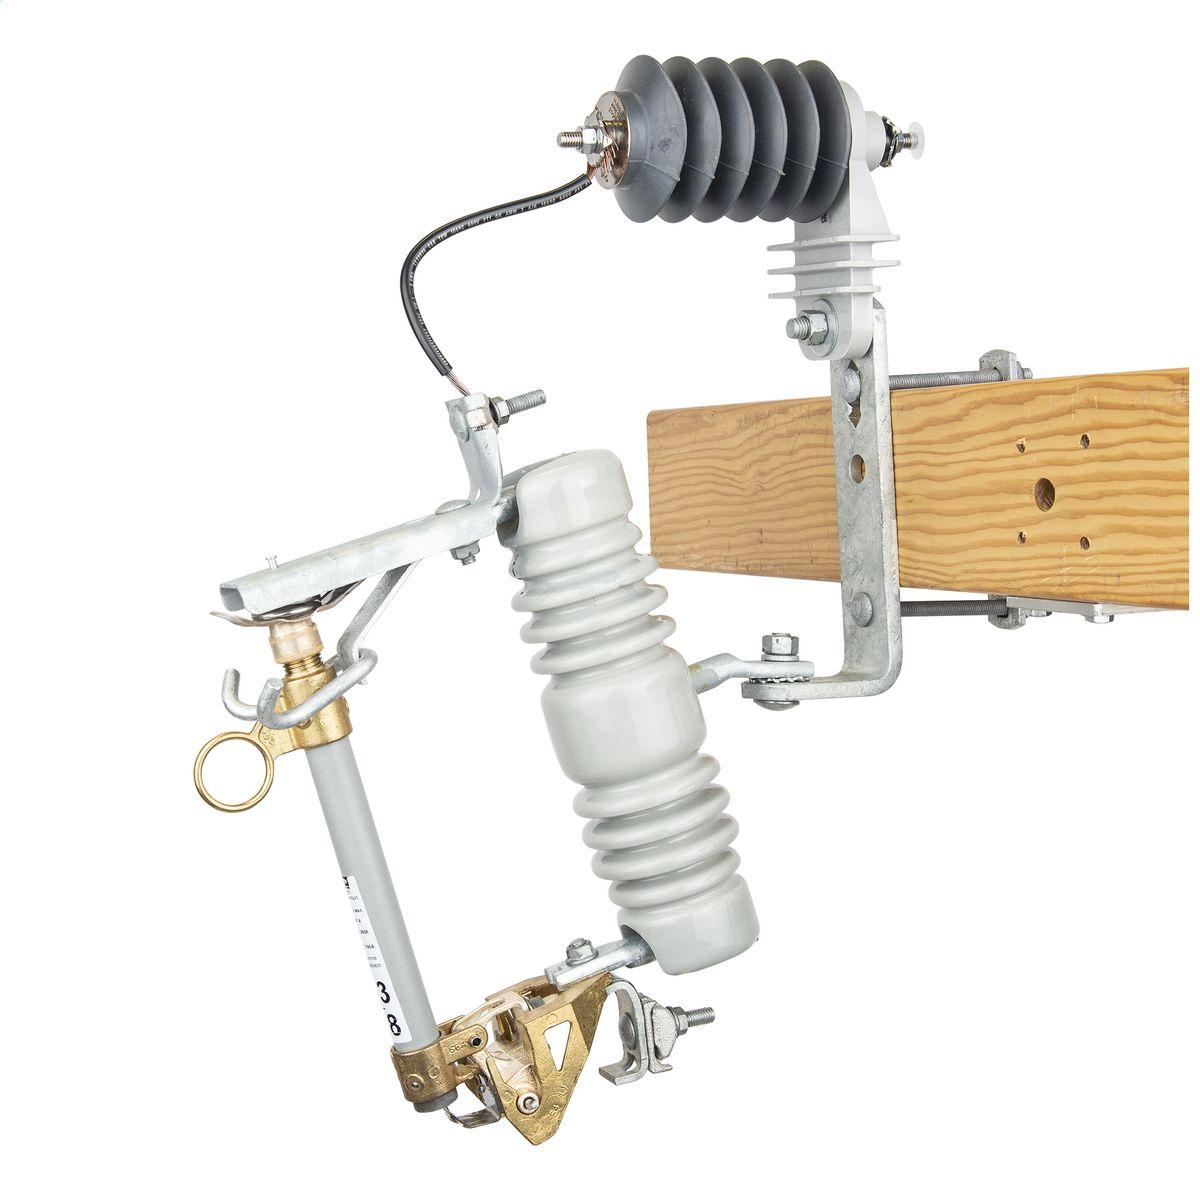 Hubbell C71DL112LXM 15 kV, 110 kV BIL, Standard Type C Porcelain Cutout / Arrester Combination with a 100A, 10kAIC fuseholder, large eyebolt connector and an extended NEMA "B" crossarm bracket. 